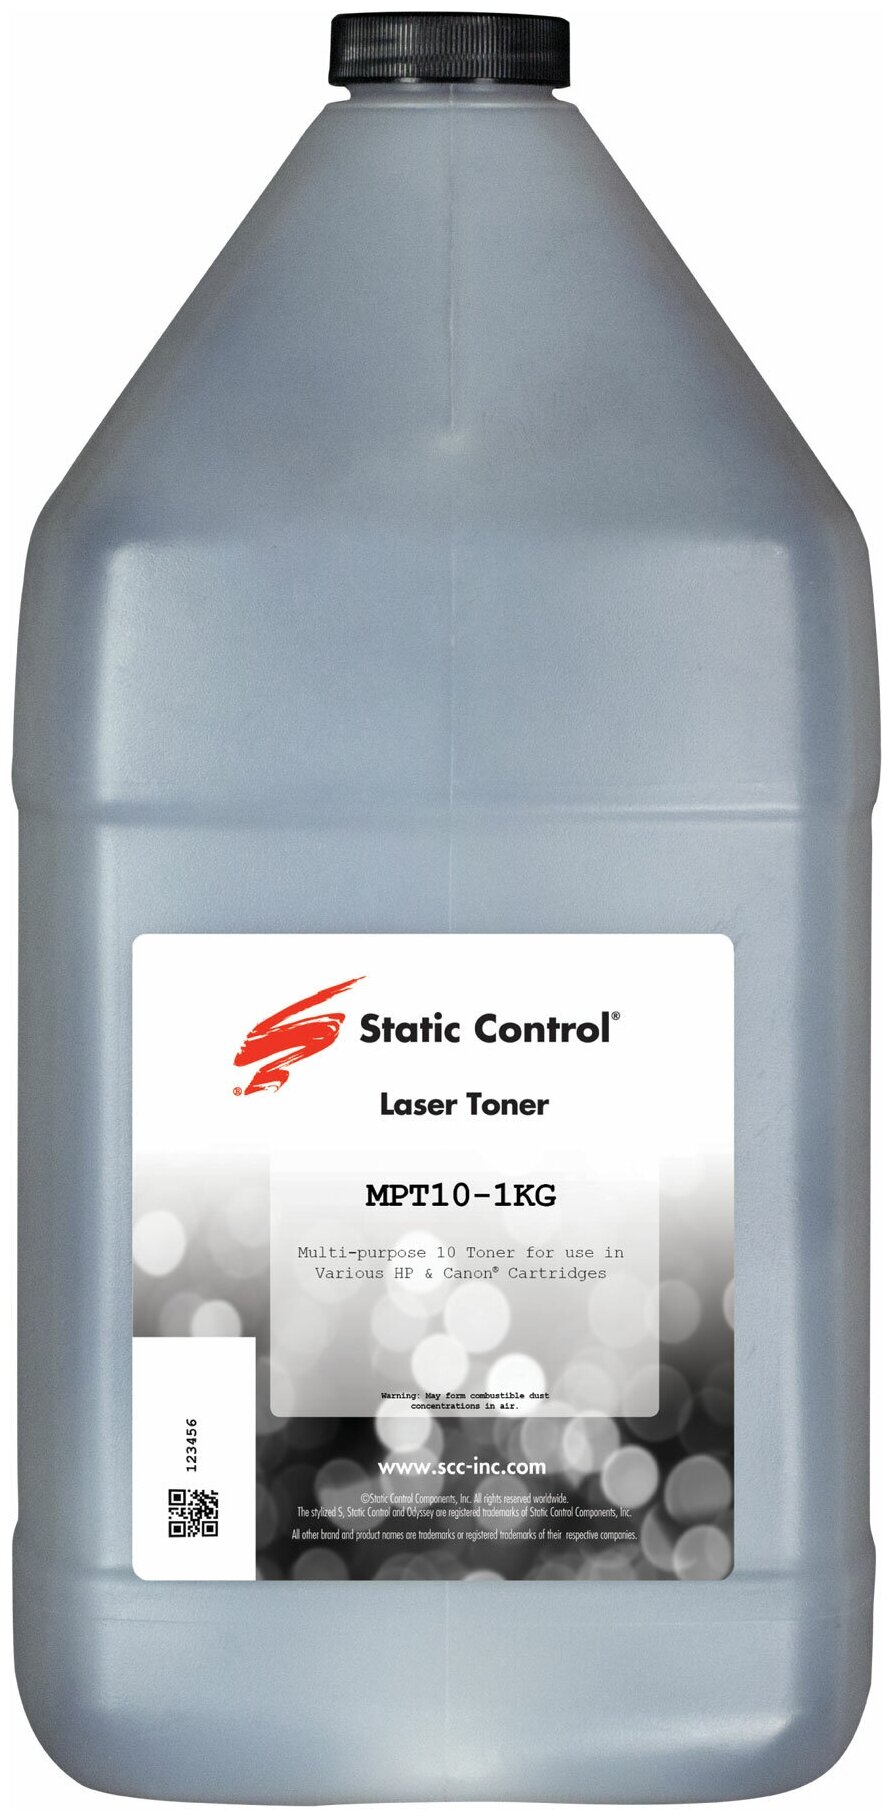 Тонер Static Control MPT10-1KG бутыль 1 кг, черный (MPT10-1KG)